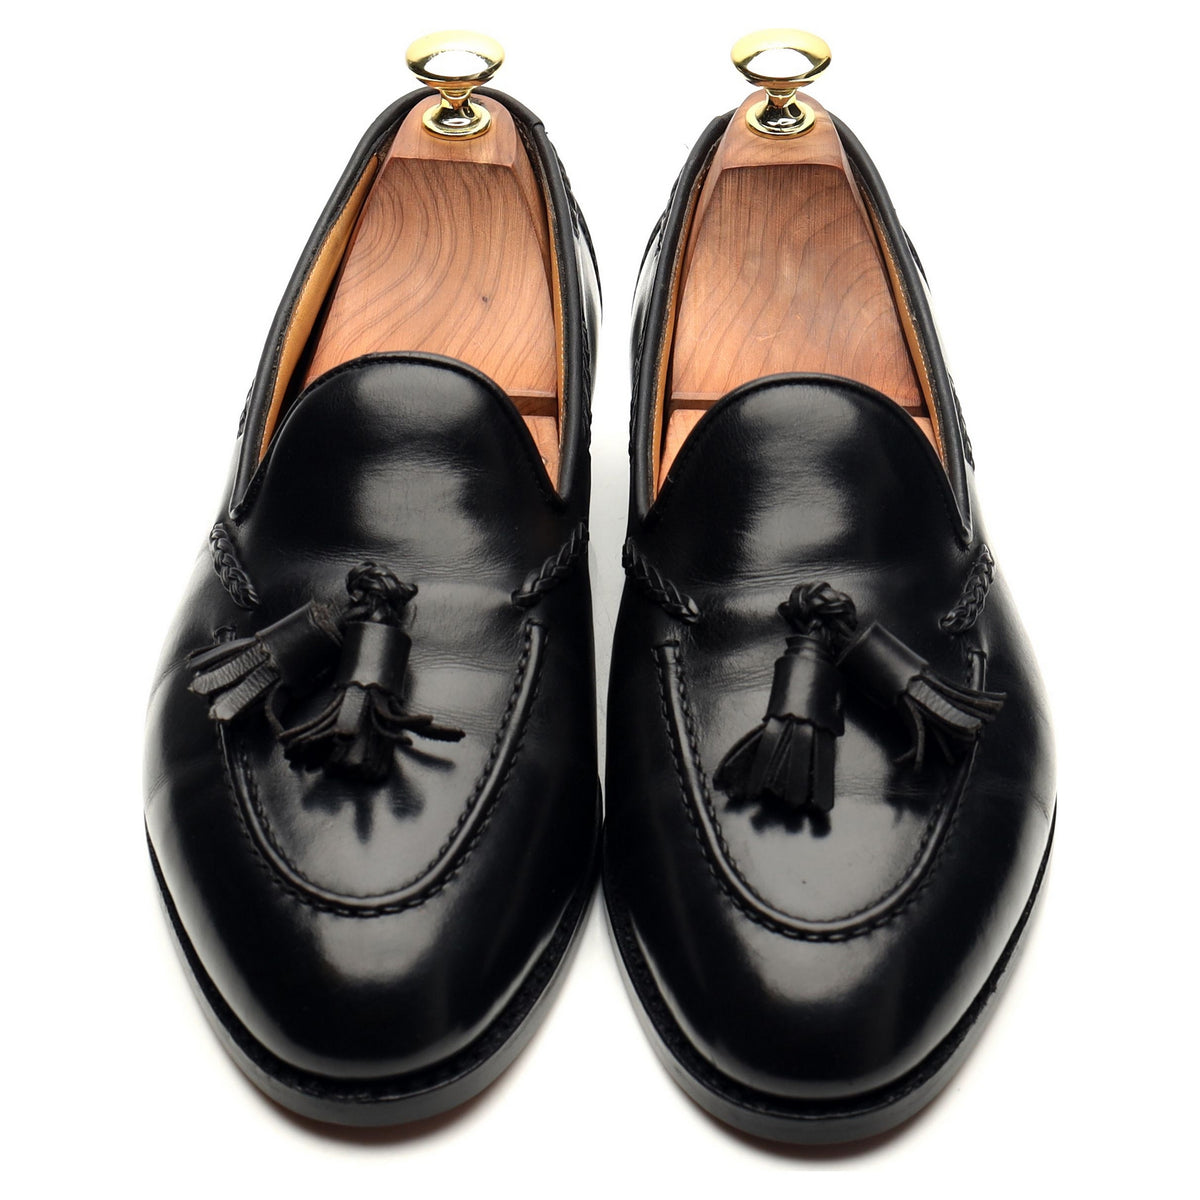 &#39;Belgravia&#39; Black Leather Tassel Loafers UK 7.5 E